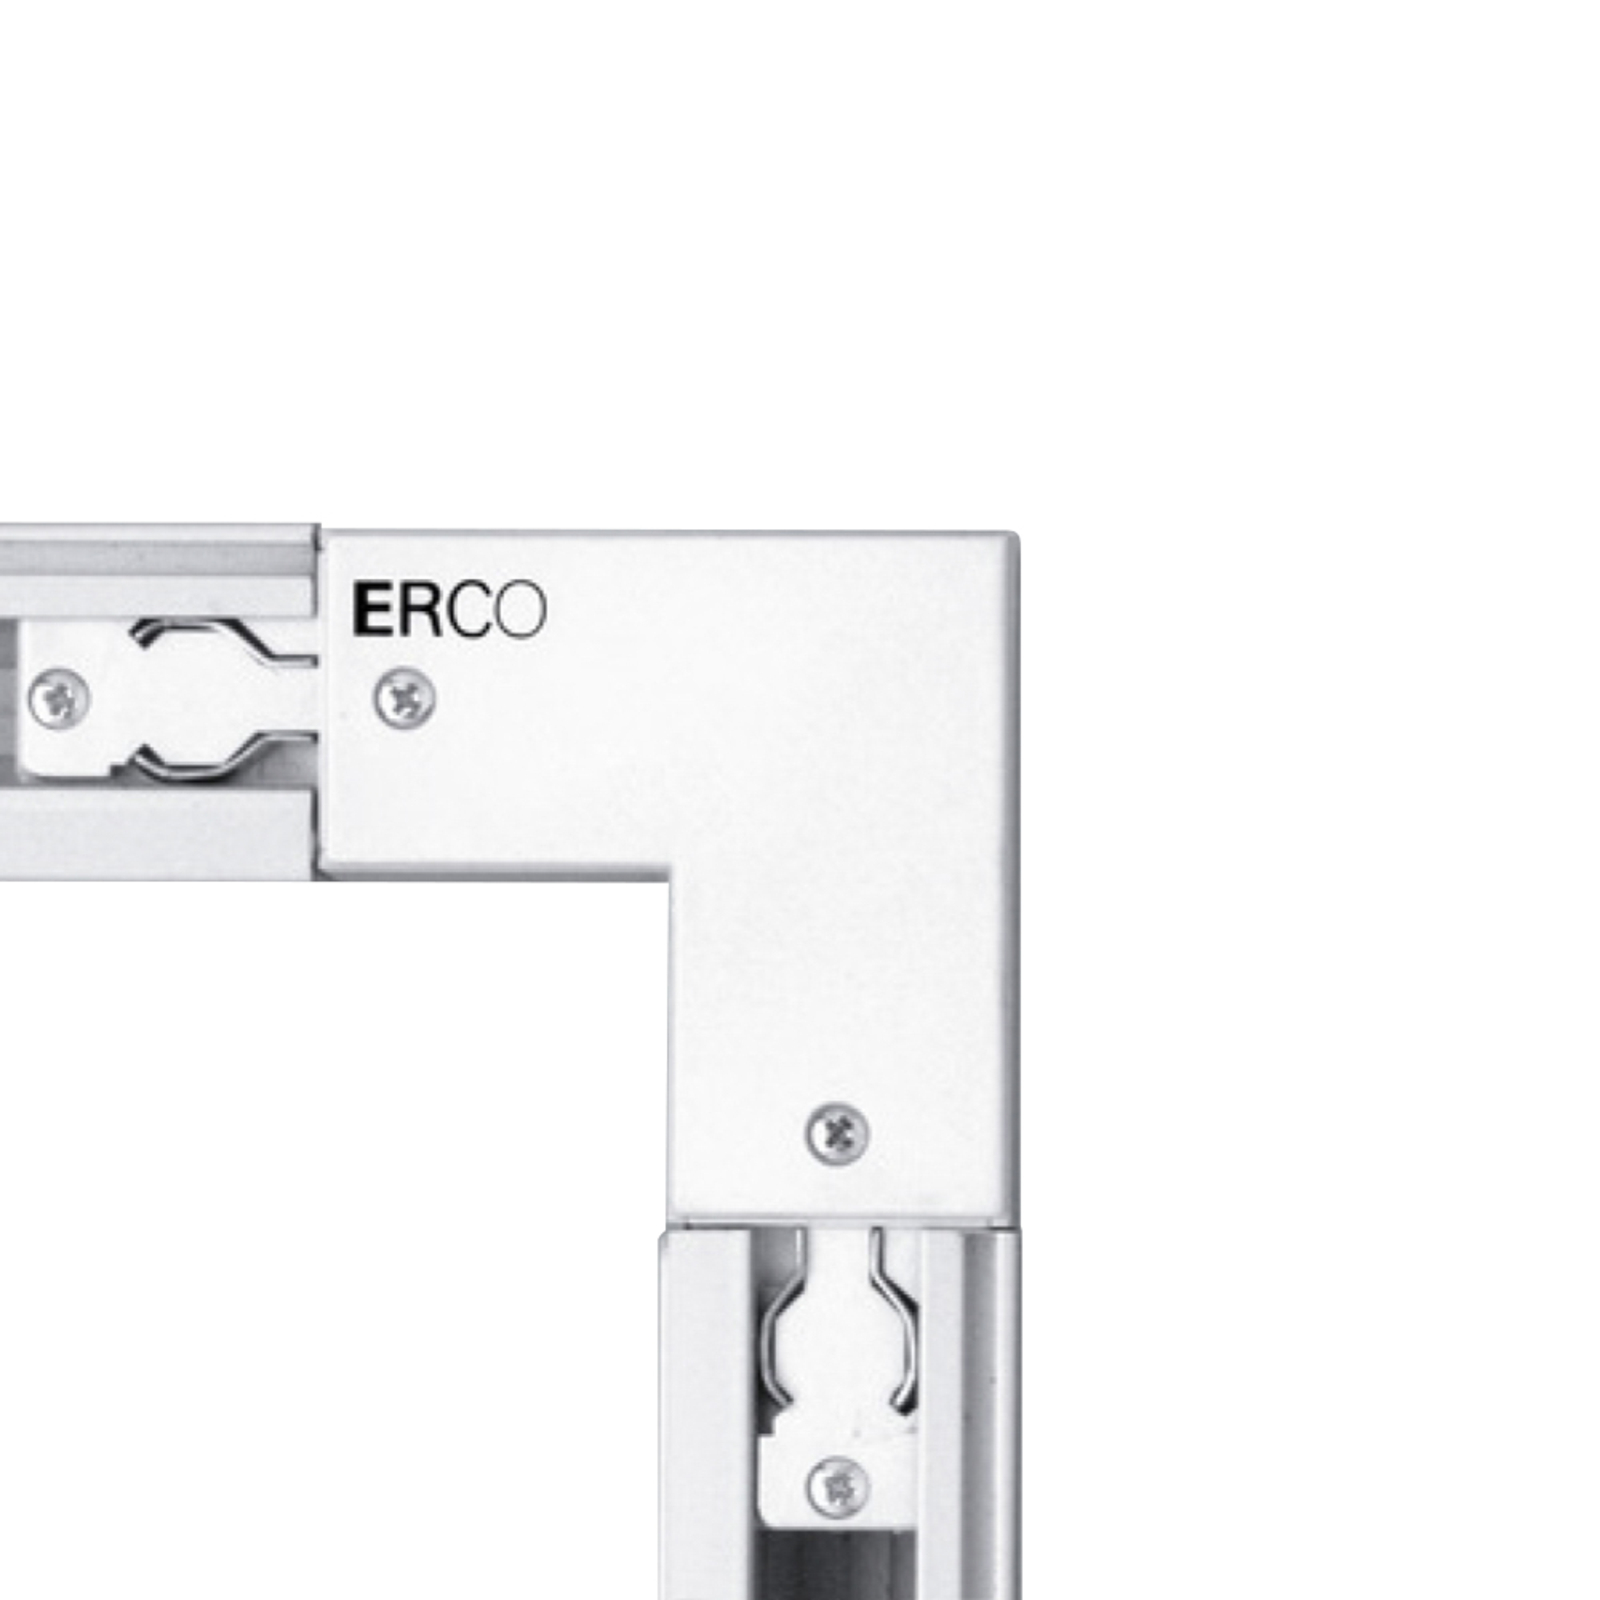 ERCO 3-circuit corner connector, PE outside, white